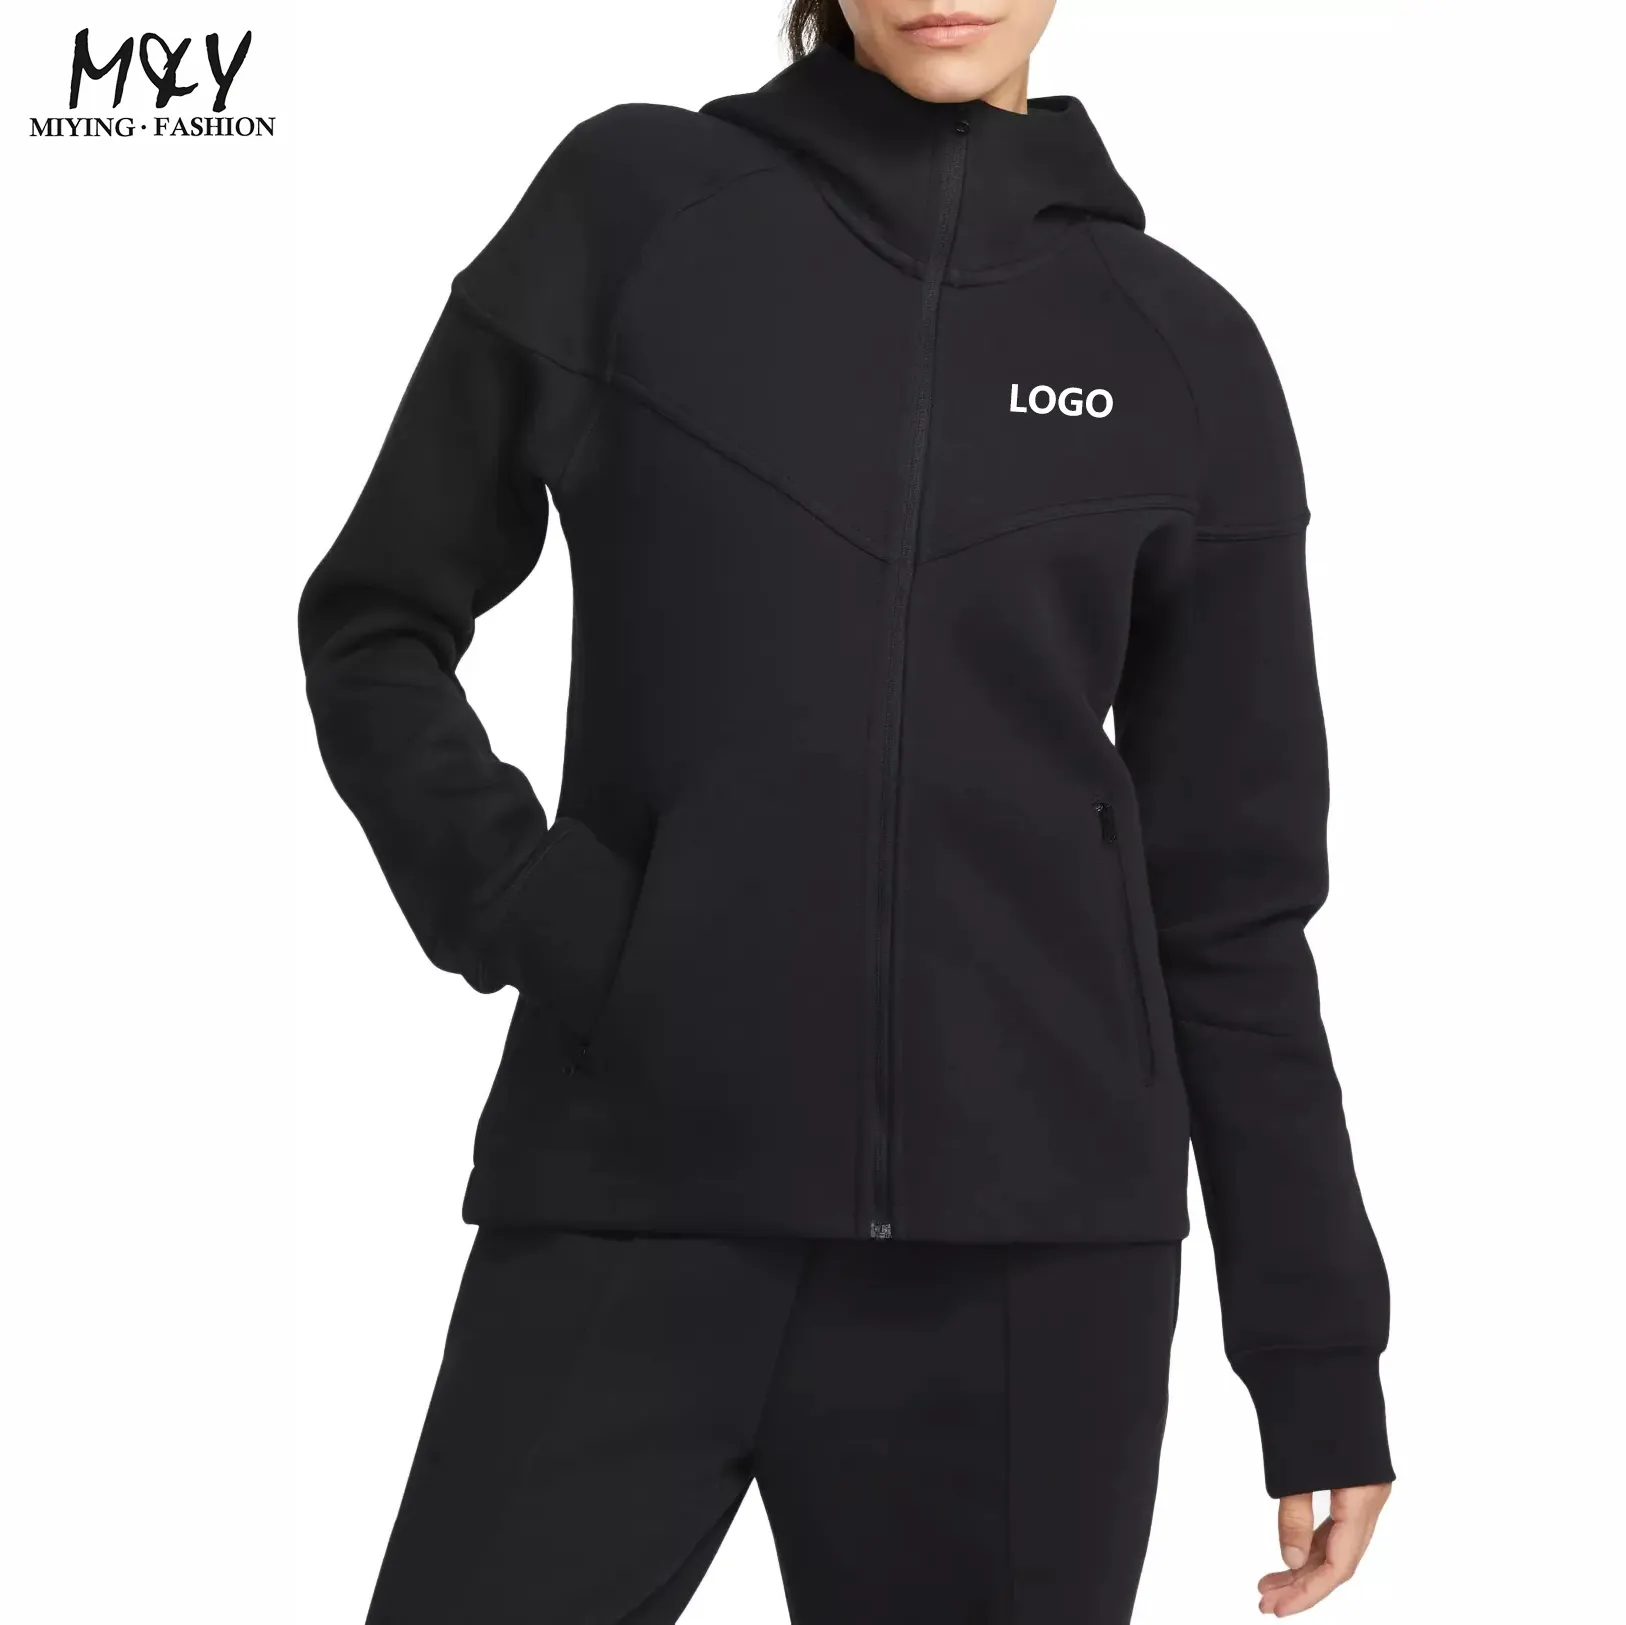 Autumn /Winter Fashion Sports Running Cycling Zipper Hooded Jacket Custom Logo Fabric Casual Sweatshirts Women Clothing